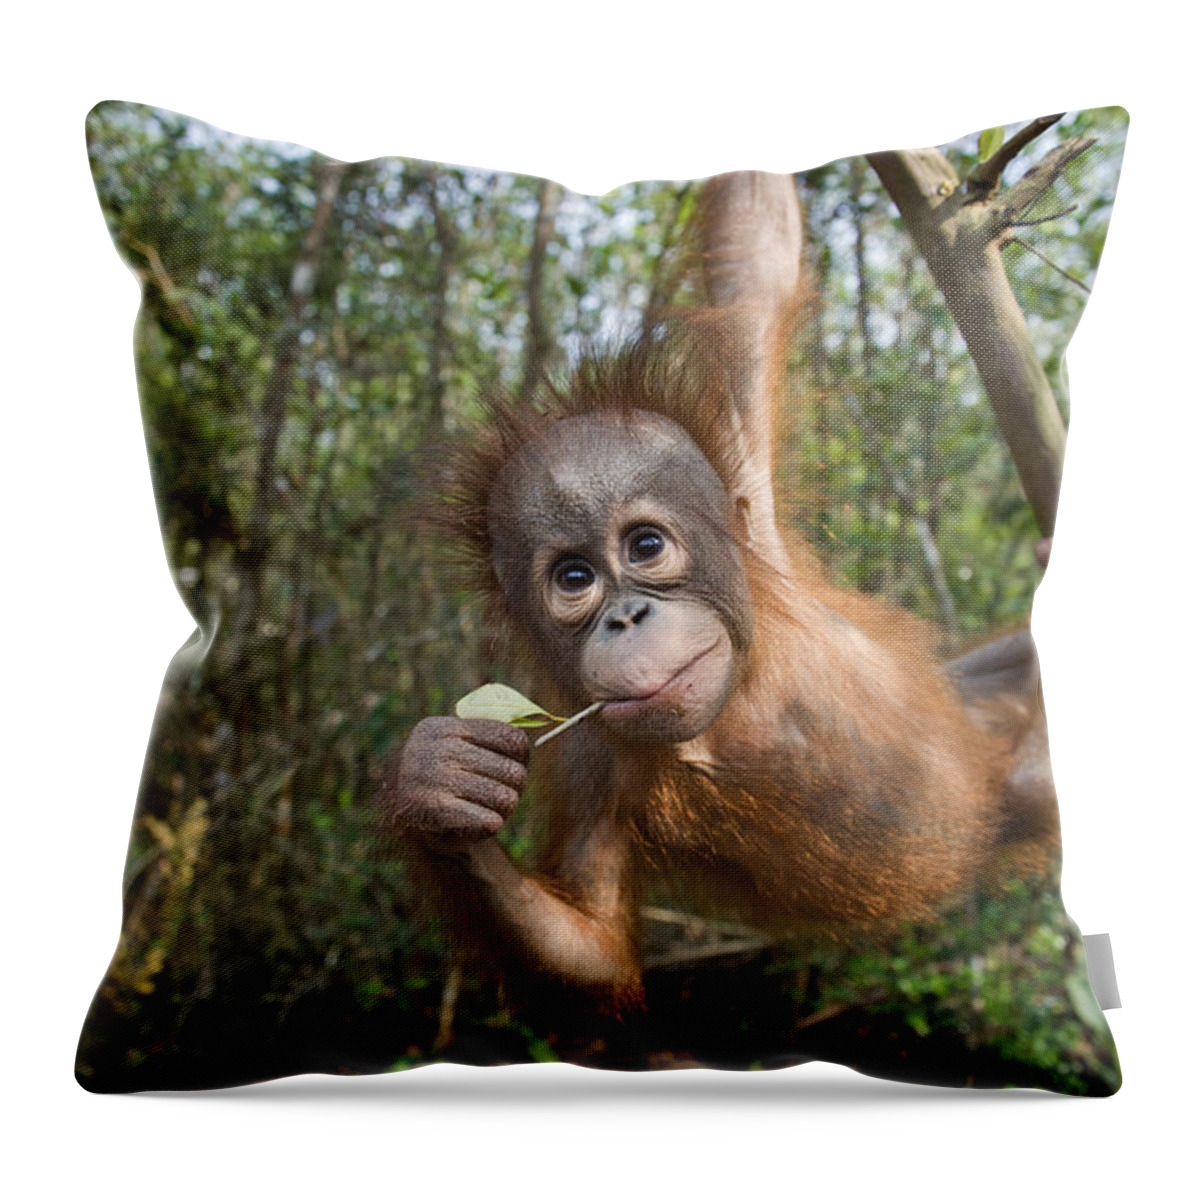 00486855 Throw Pillow featuring the photograph Orangutan 2yr Old Infant Playing #1 by Suzi Eszterhas